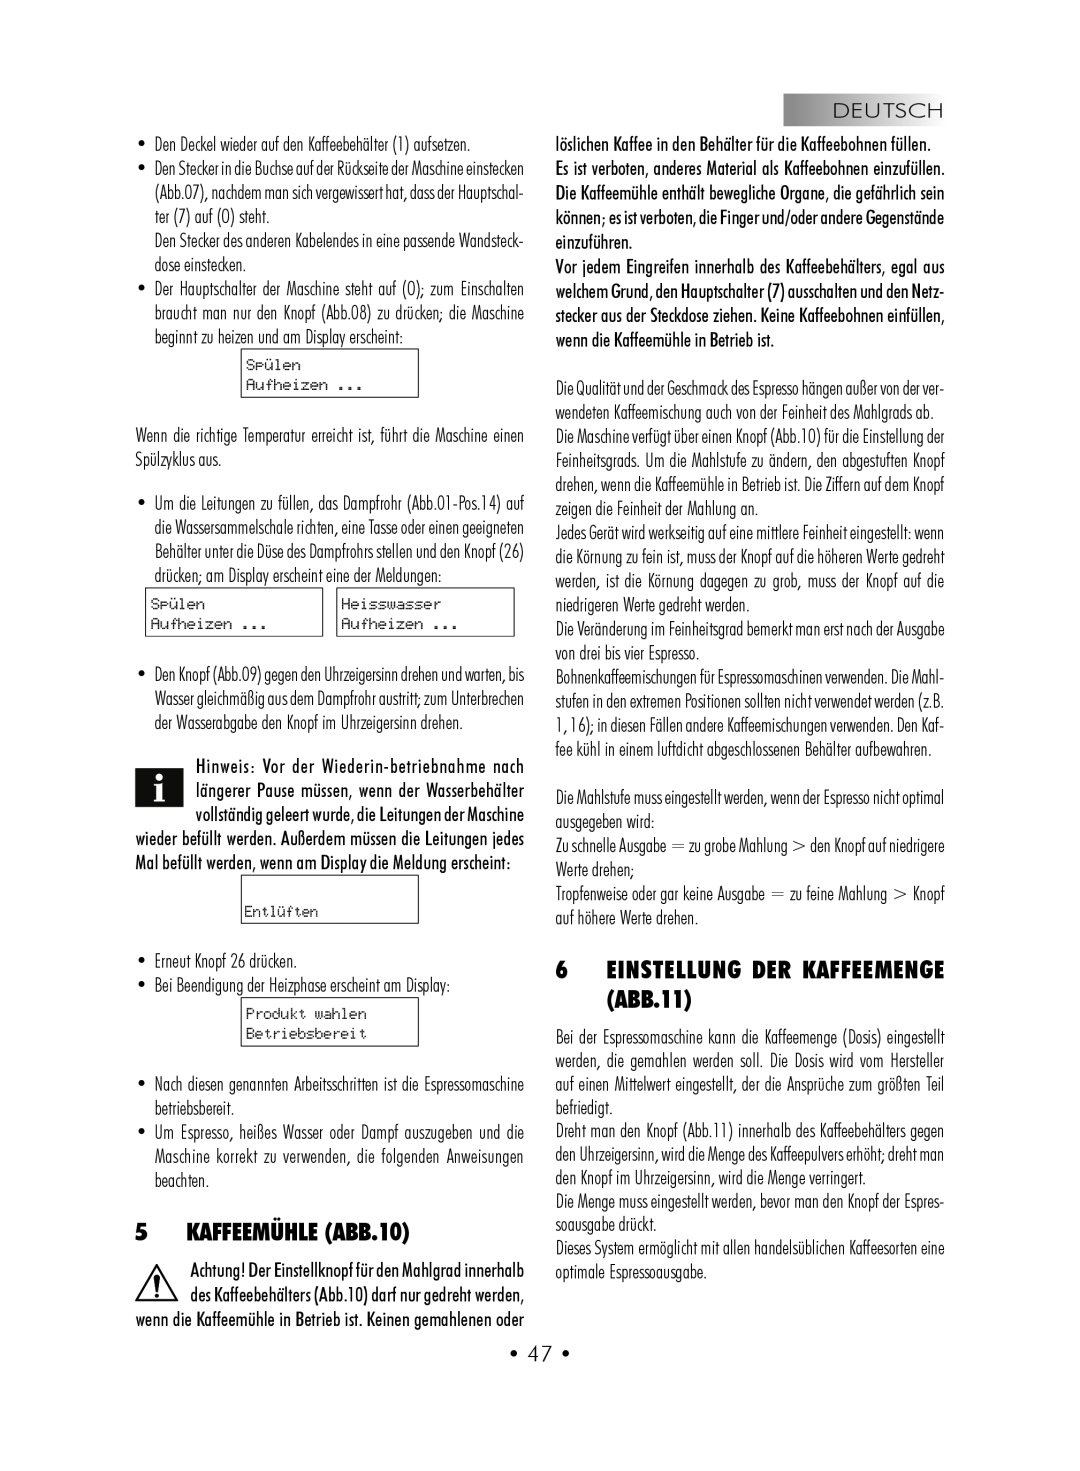 Gaggia SUP027YDR manual KAFFEEMÜHLE Abb.10, 6EINSTELLUNG DER KAFFEEMENGE Abb.11, • 47 • 